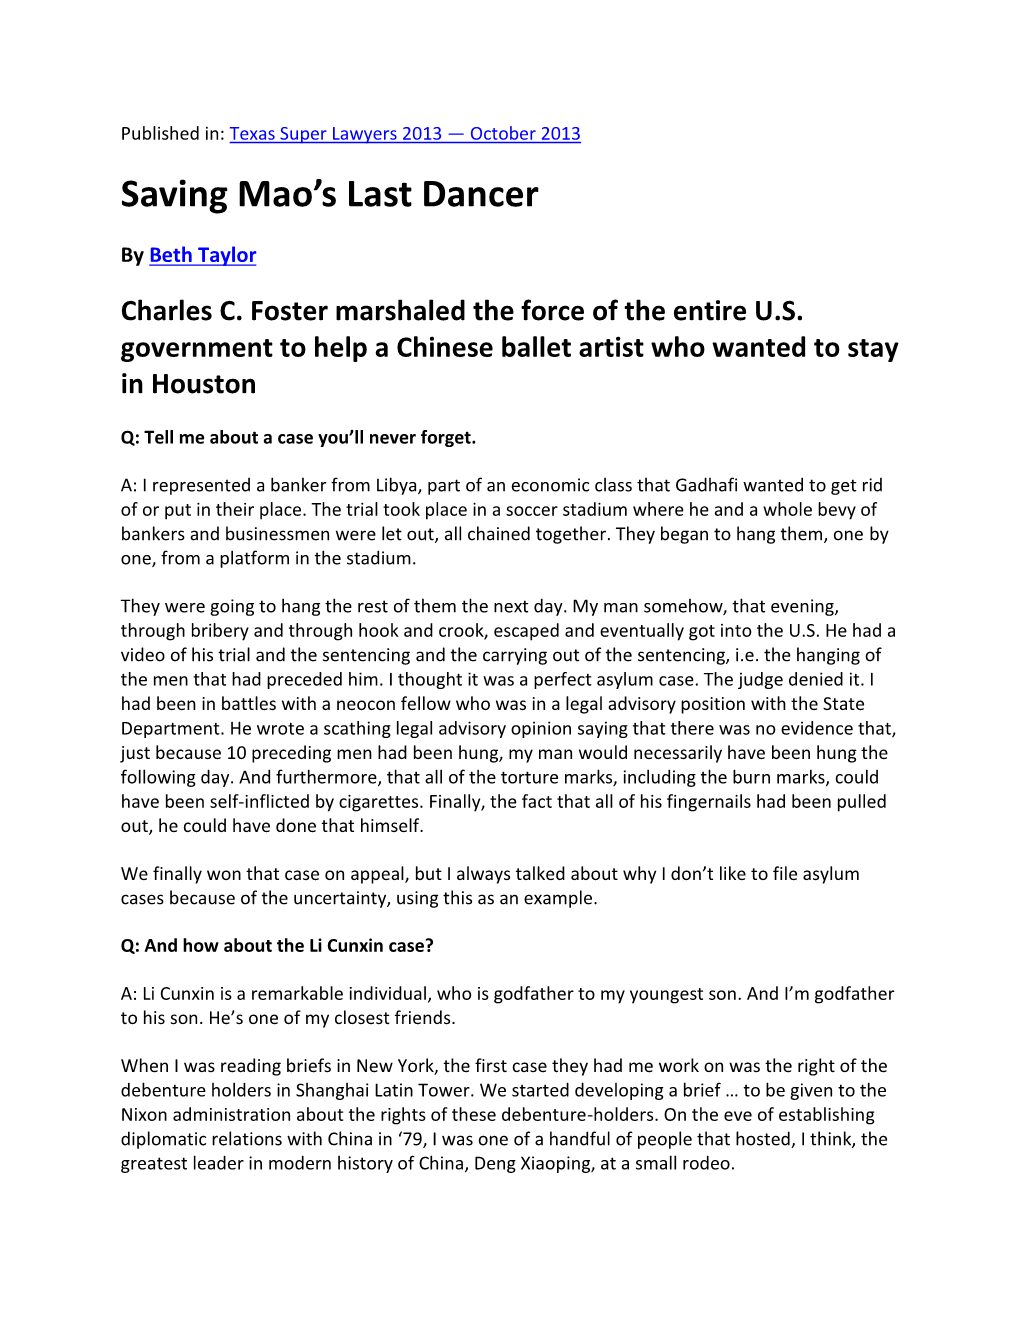 Saving Mao's Last Dancer